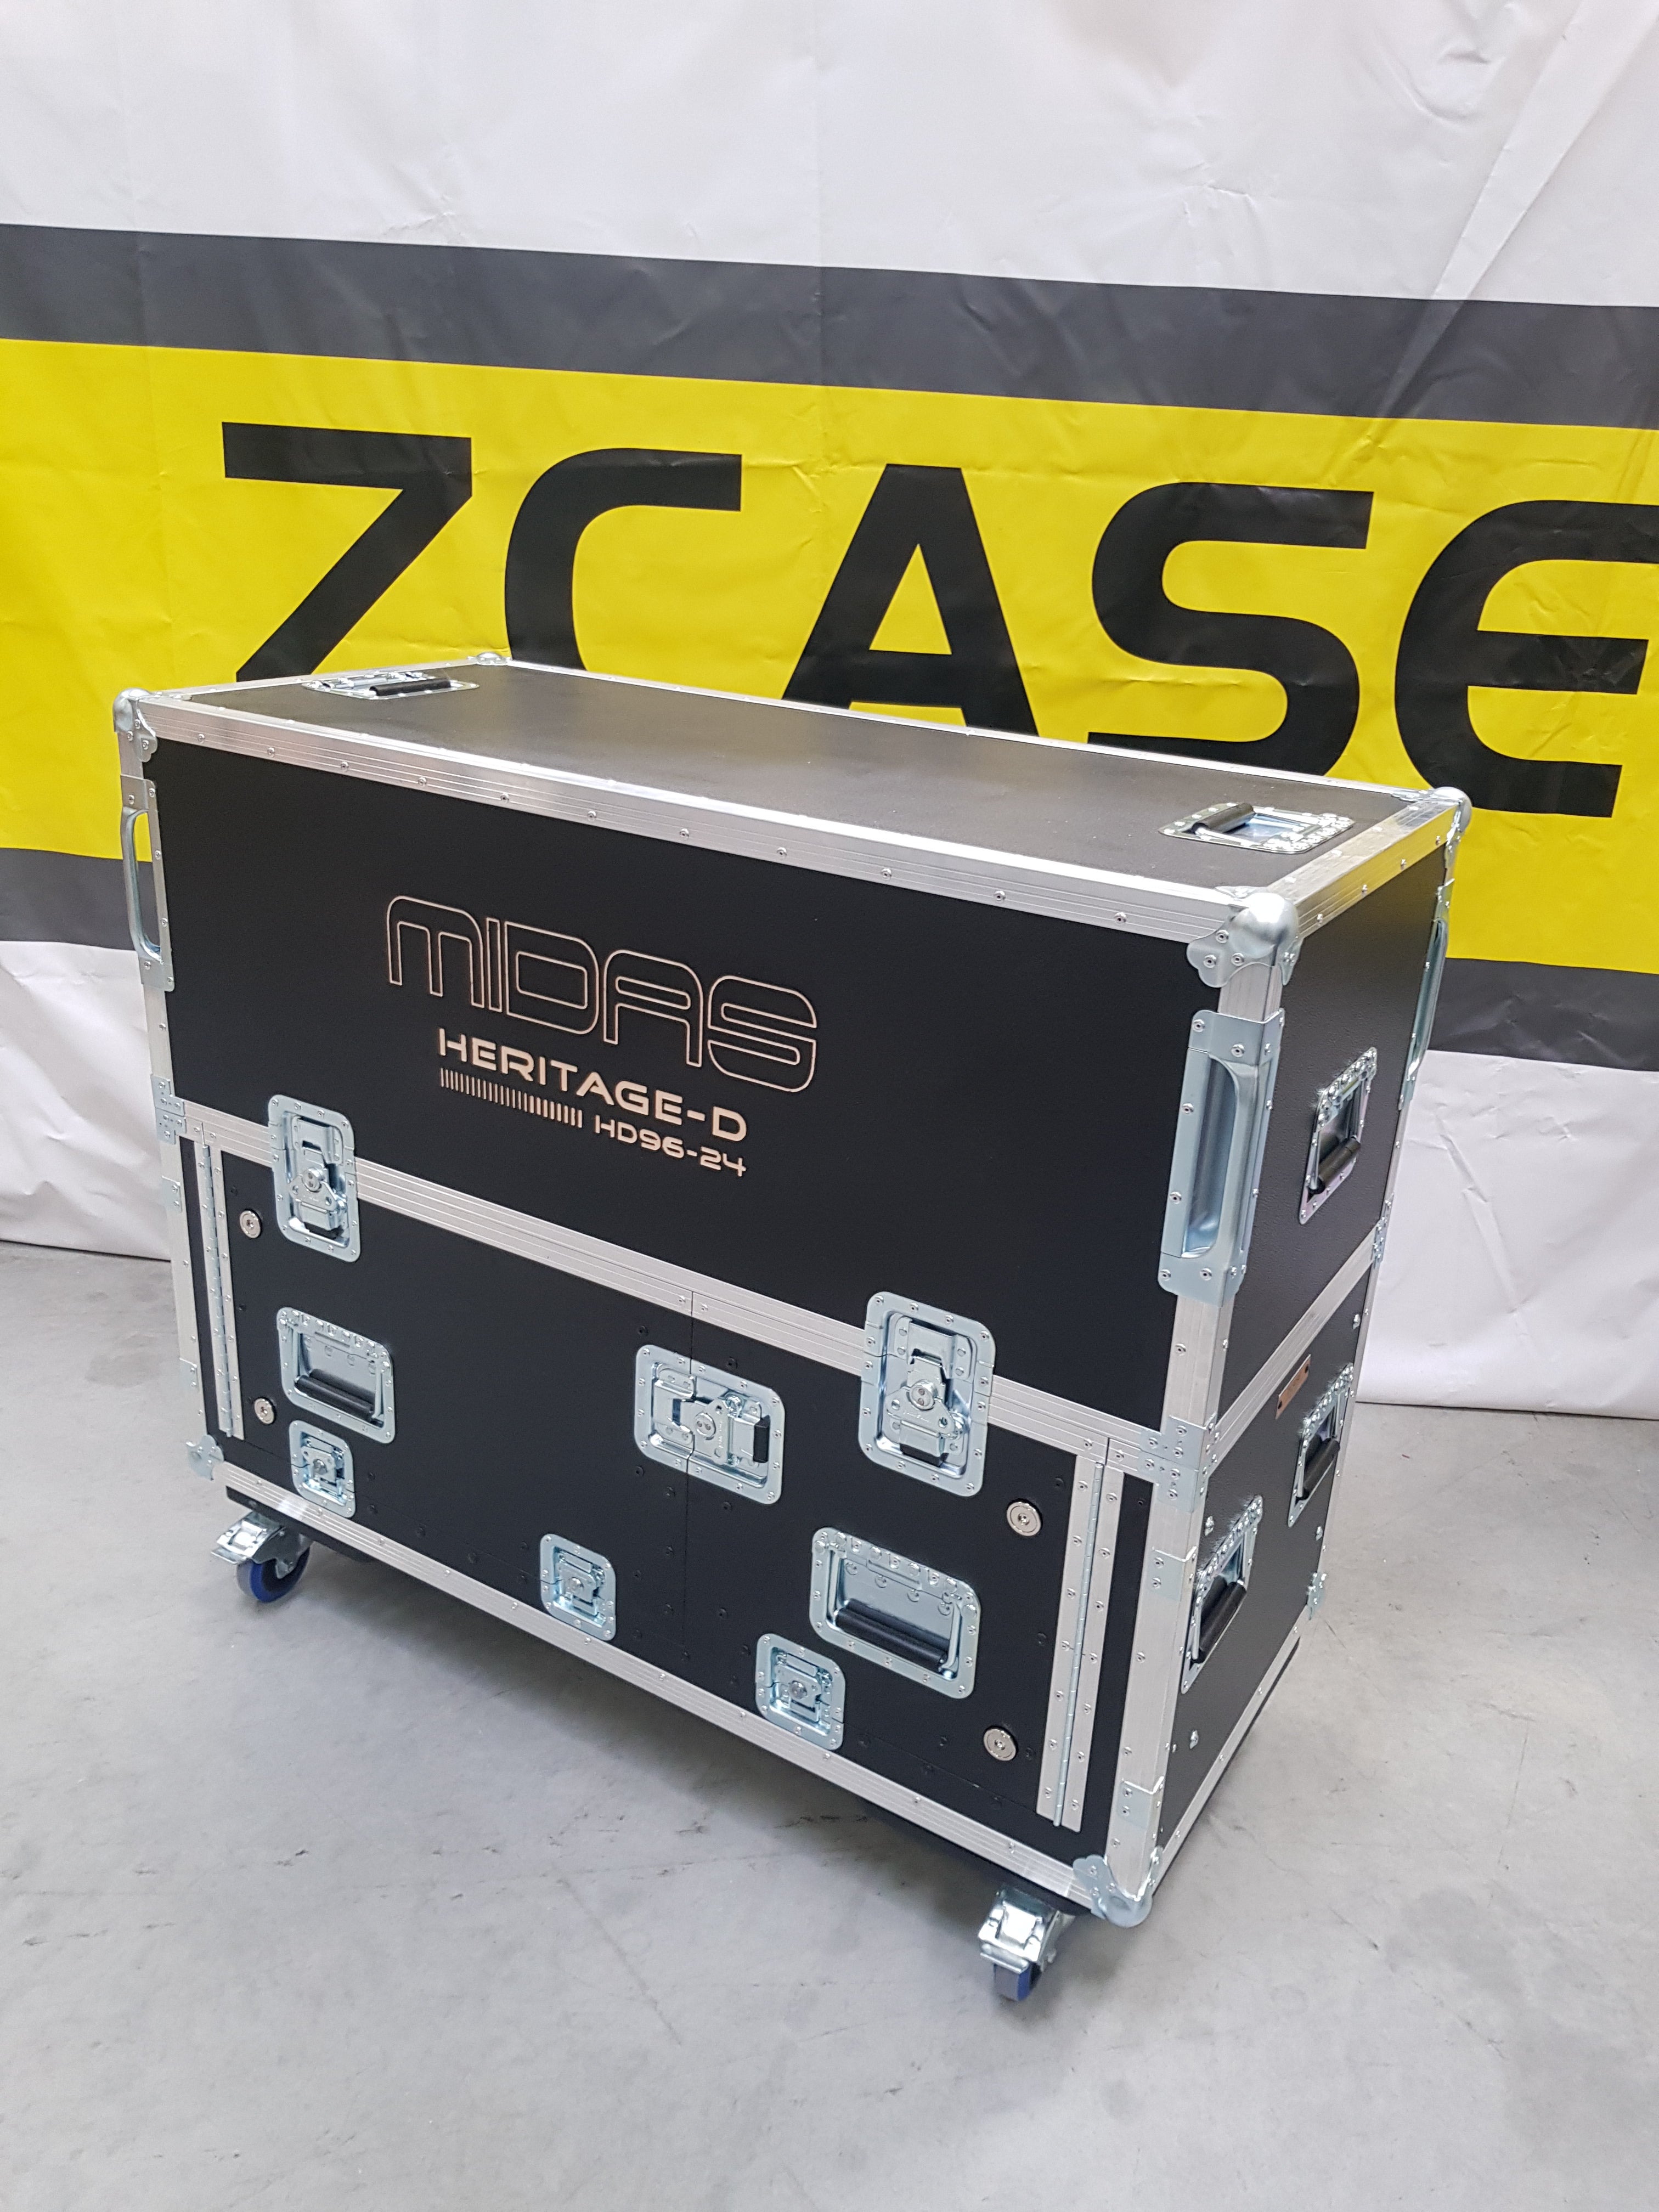 Pro X For MIDAS Heritage D Flip-Ready Hydraulic Console Easy Retracting Lifting 2U Rack Space Detachable Case by ZCASE HD96-24 XZF-MID-HD-D-2U-LMA